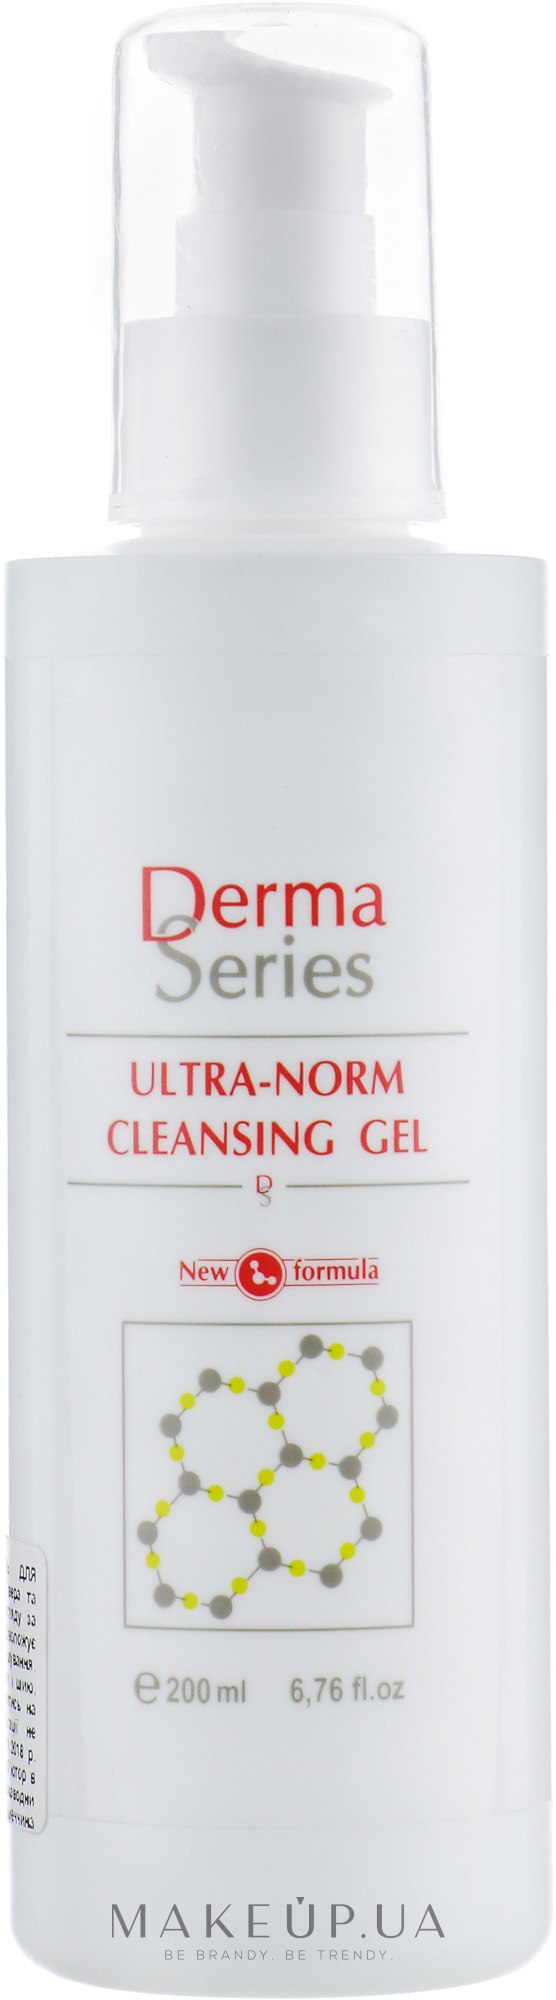 Нормализующий очищающий гель - Derma Series Ultra-Norm Cleansing Gel  — фото 200ml